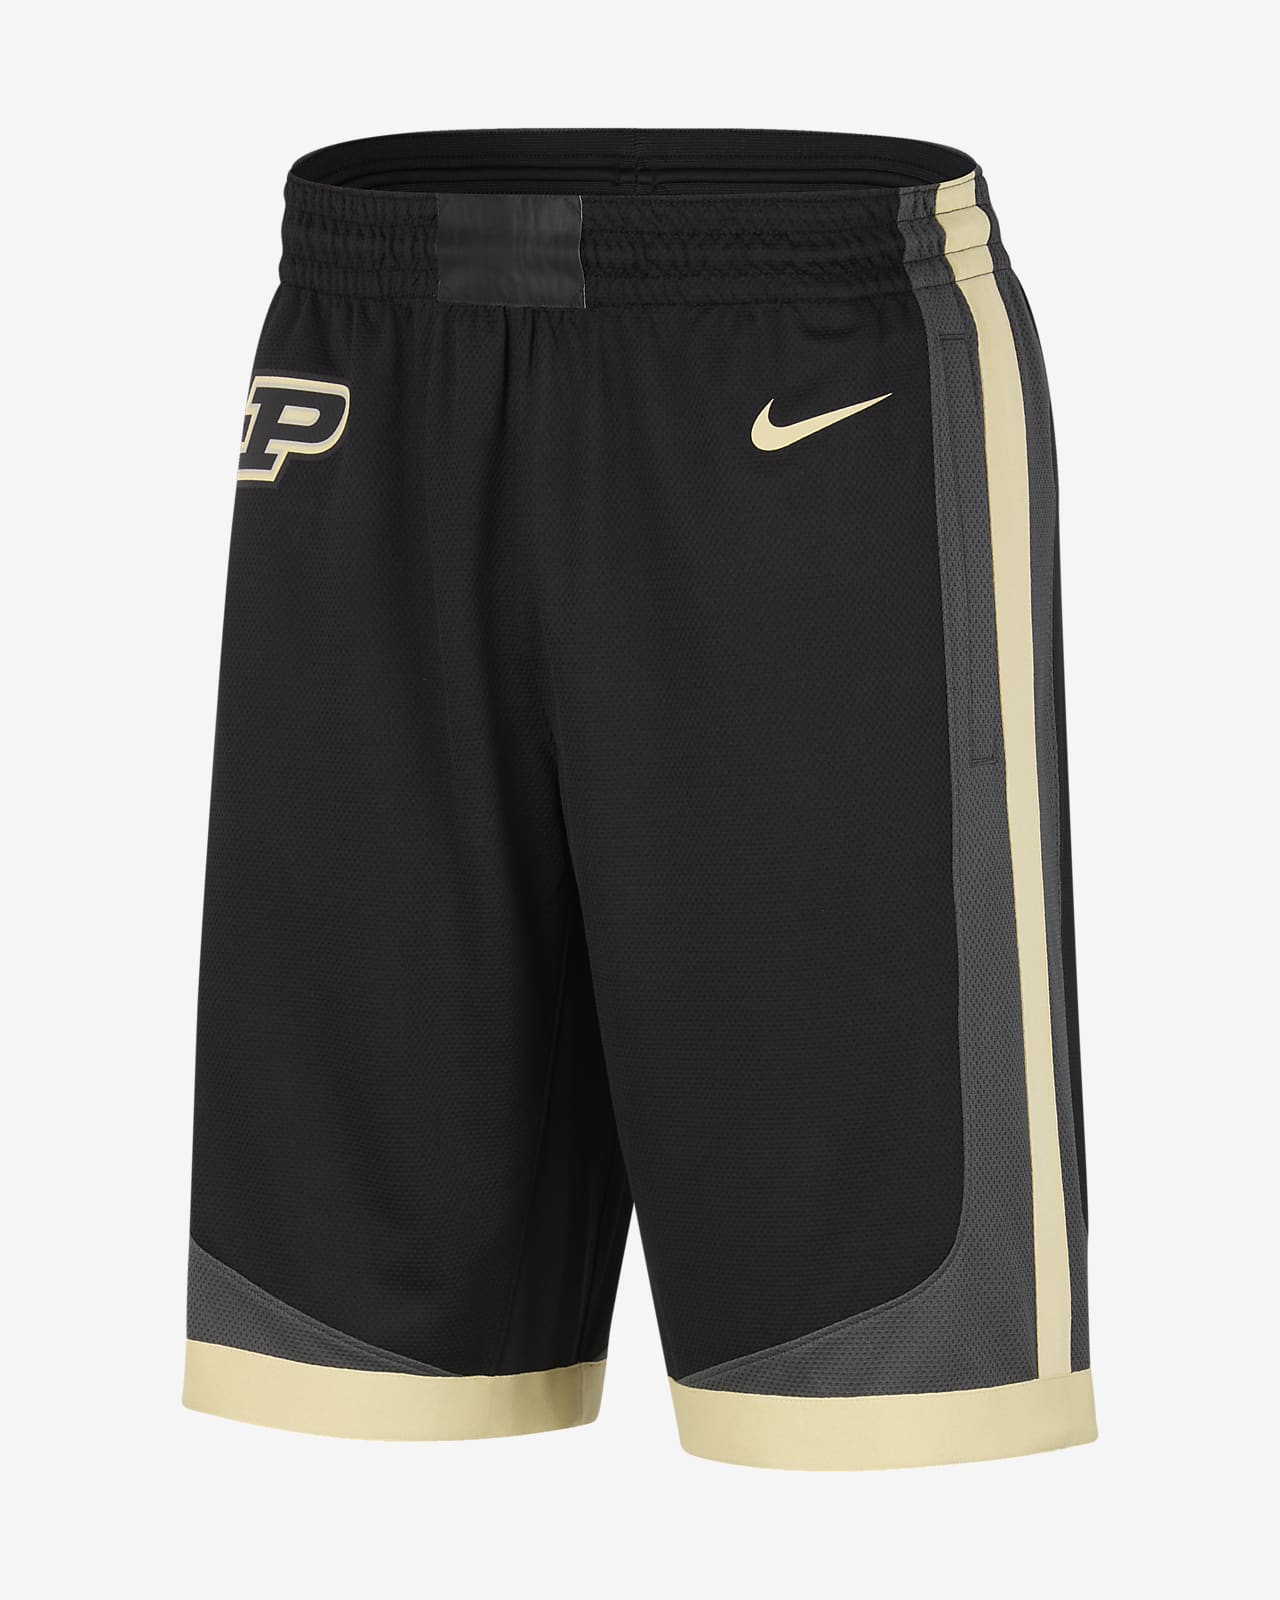 Nike NBA Authentics Compression Shorts Men's Black Used XLT